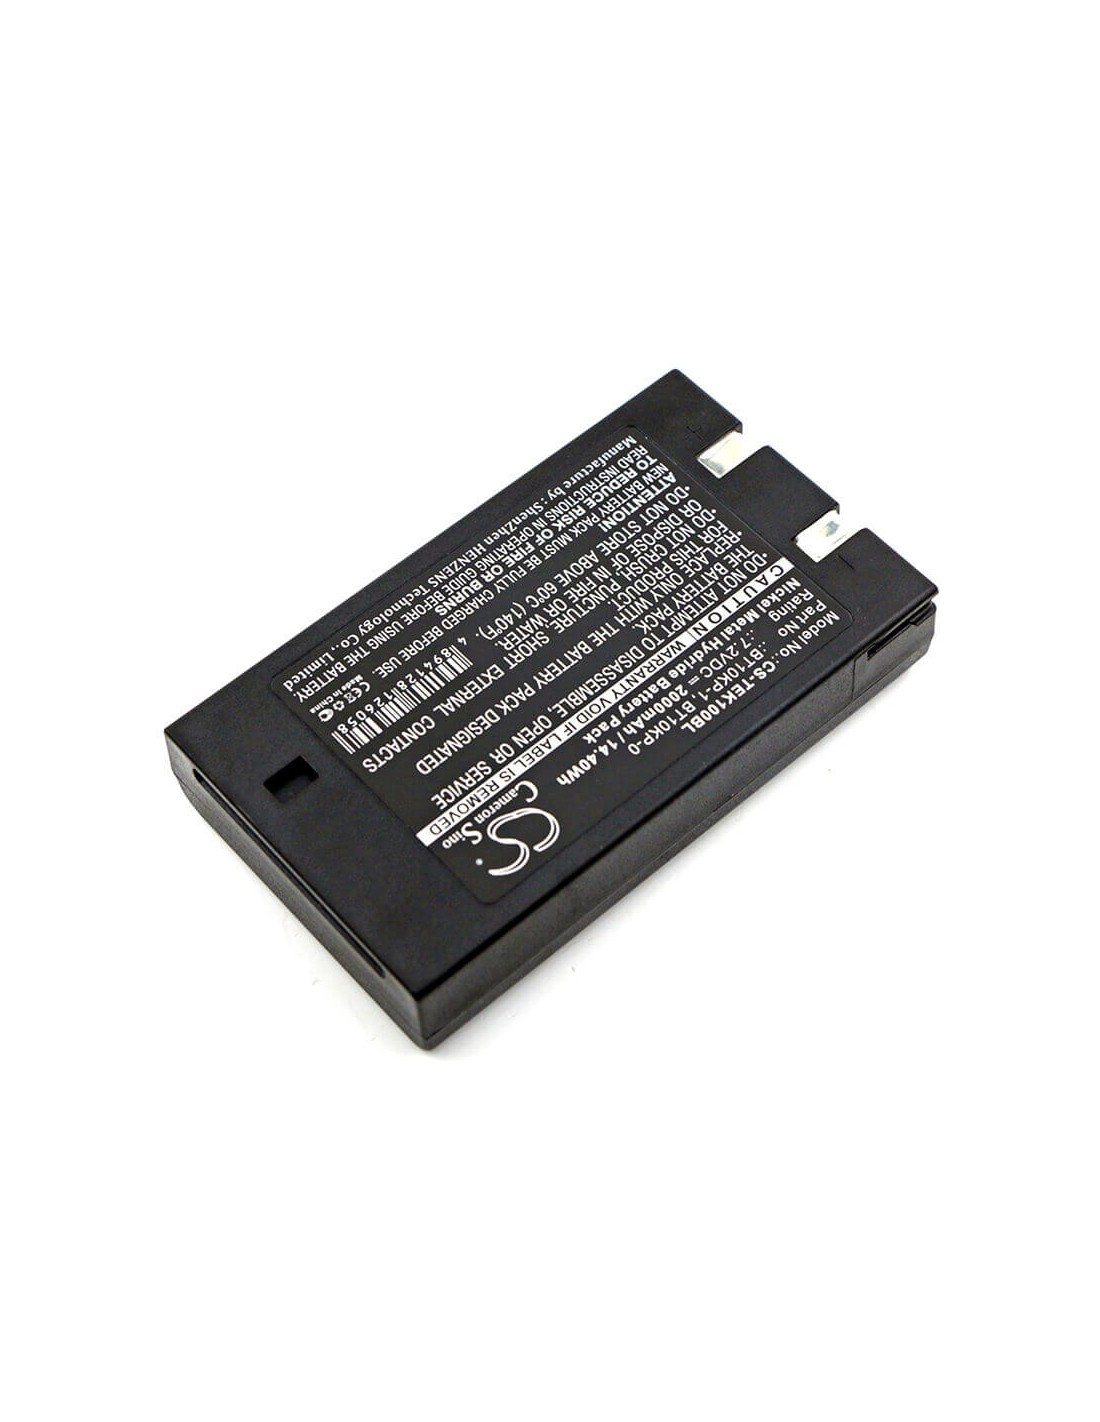 Battery for Telemotive, 10k12ss02p7, Ak02, Gxze13653-p 7.2V, 2000mAh - 14.40Wh